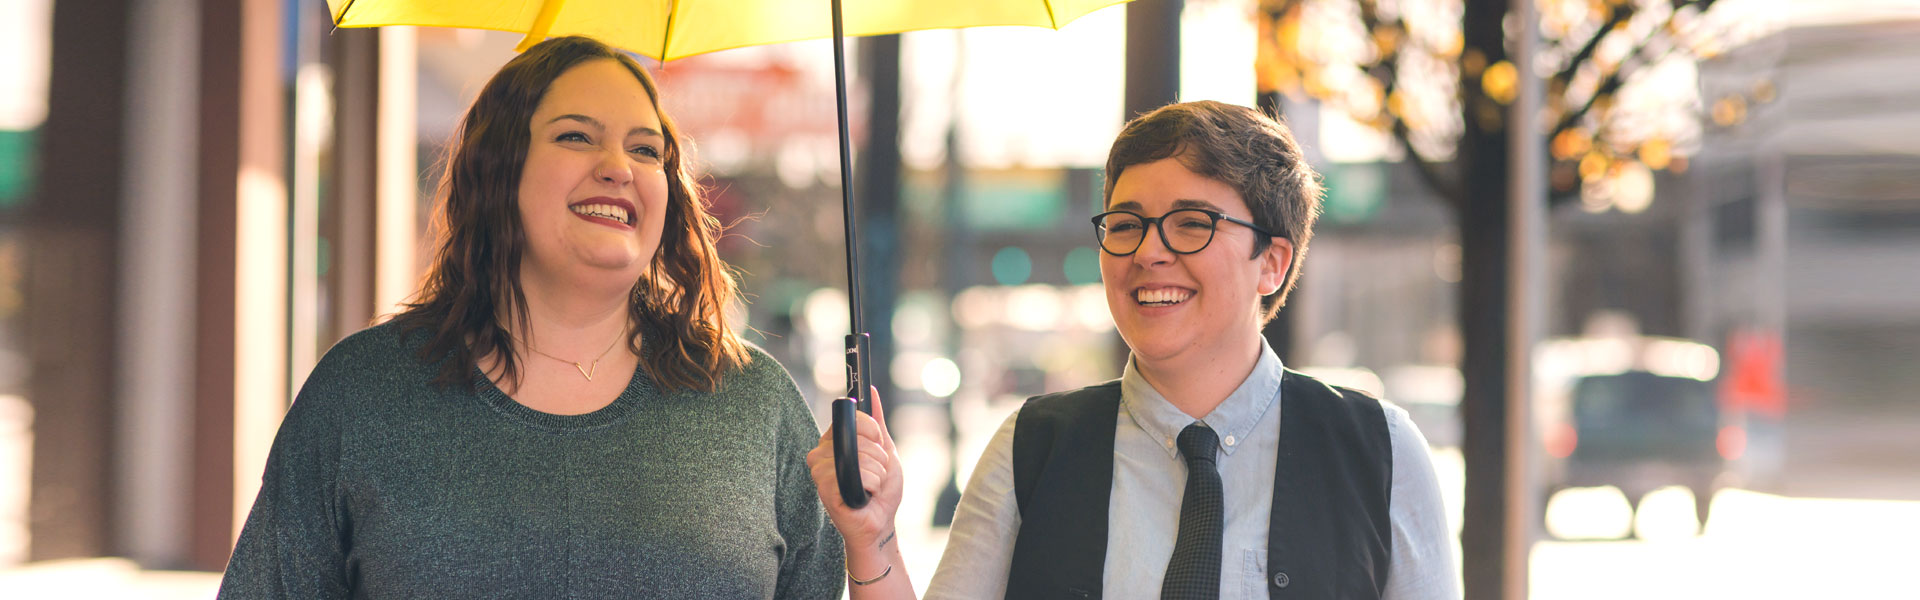 women smiling under yellow umbrella